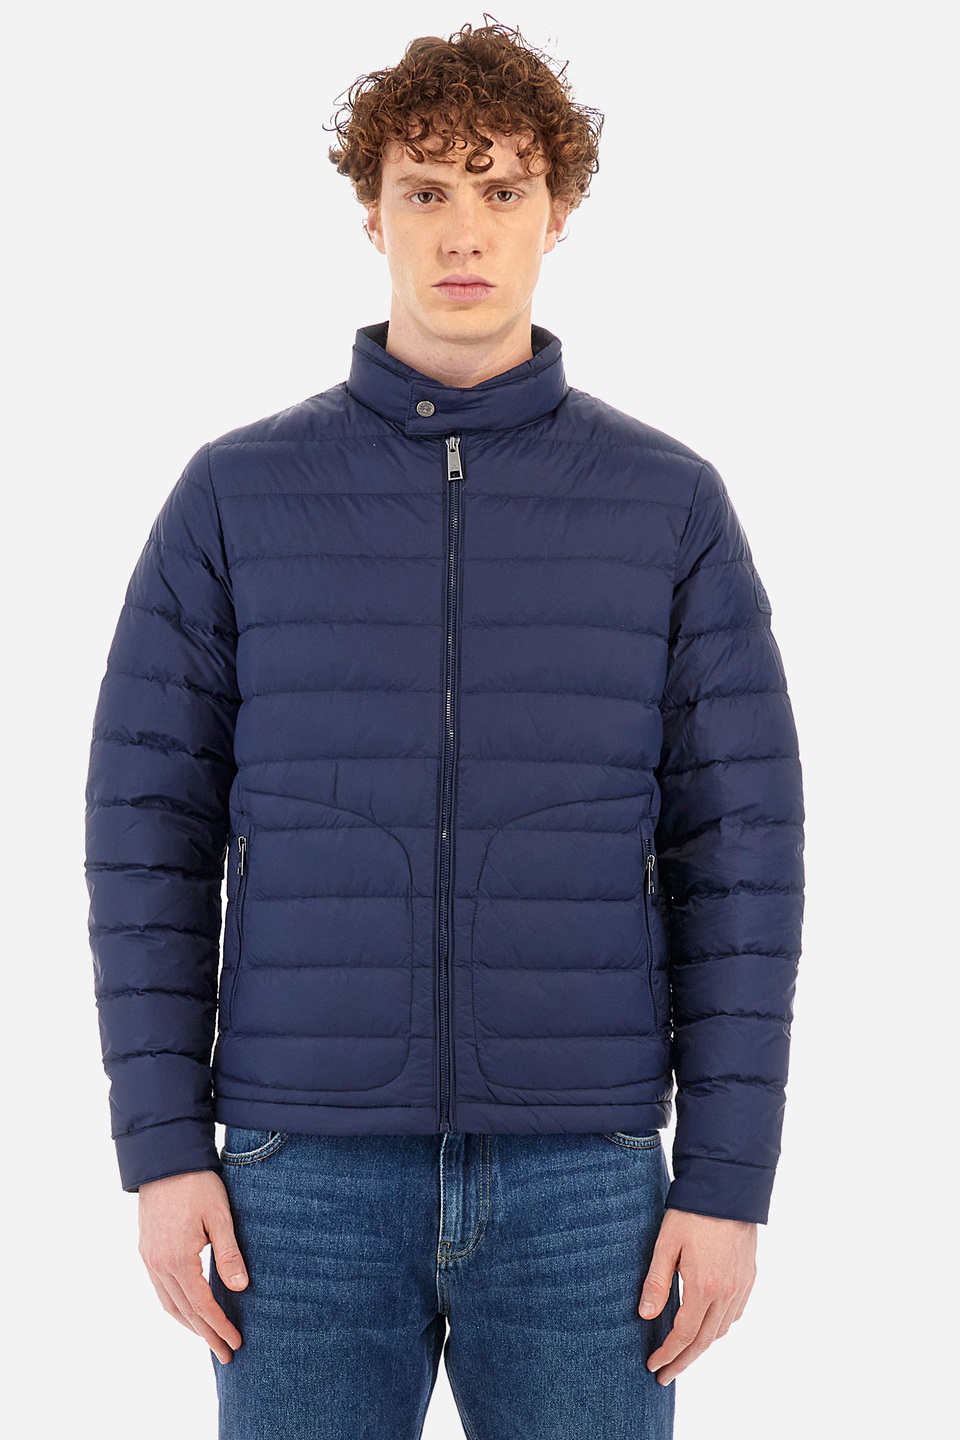 Outdoor giacca uomo regular fit - Way Blu navy La Martina